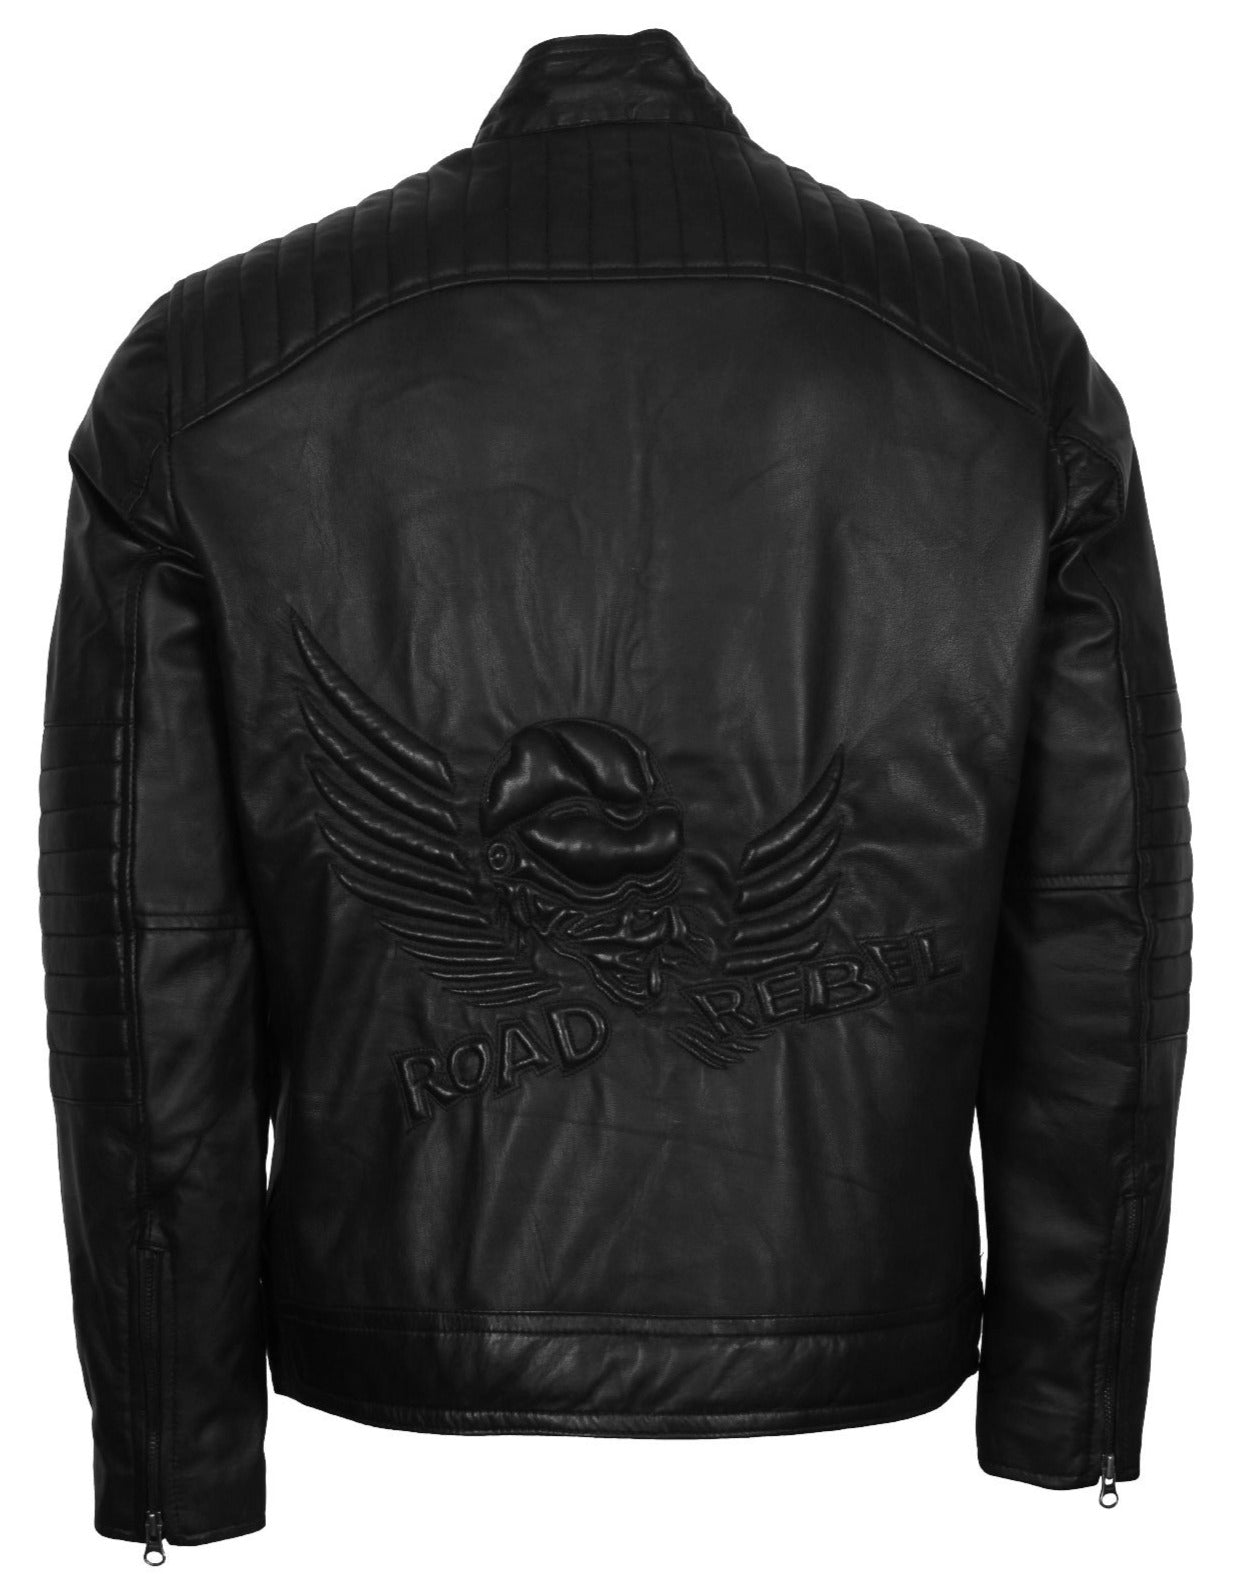 Skull With Wings Road Rebel Leather Biker Jacket